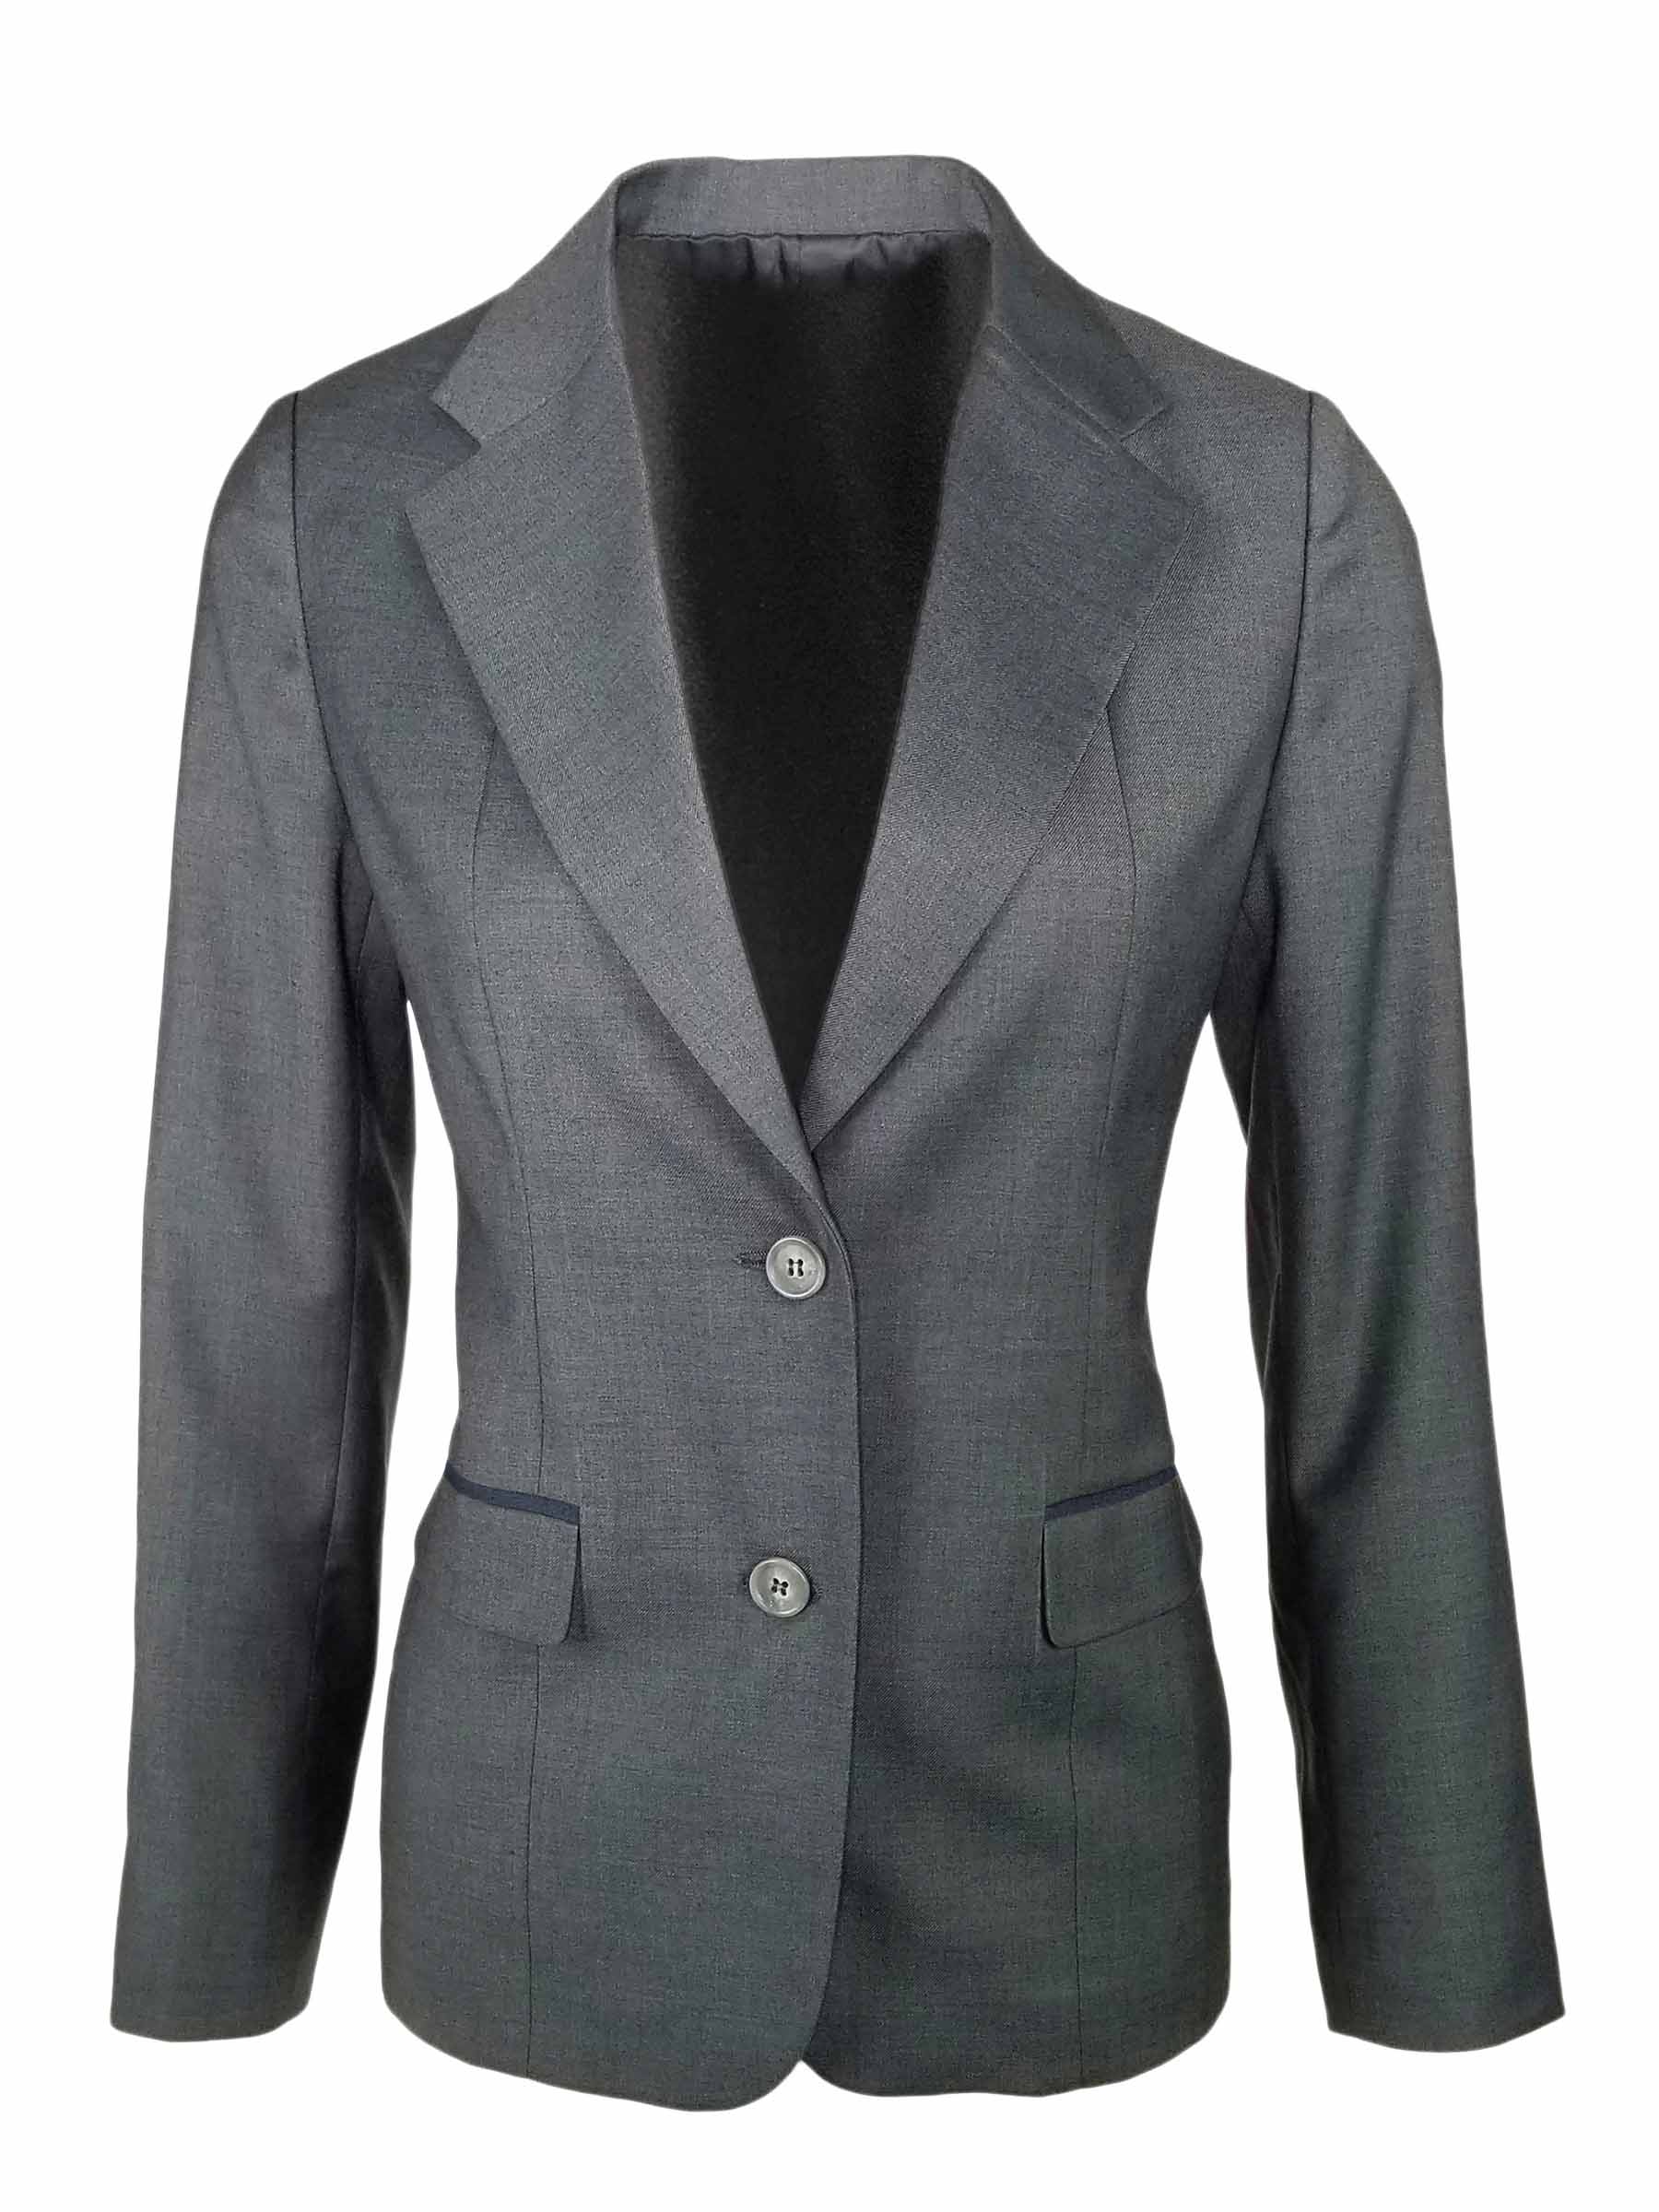 Women's Trim Jacket - Light Grey with Navy - Uniform Edit